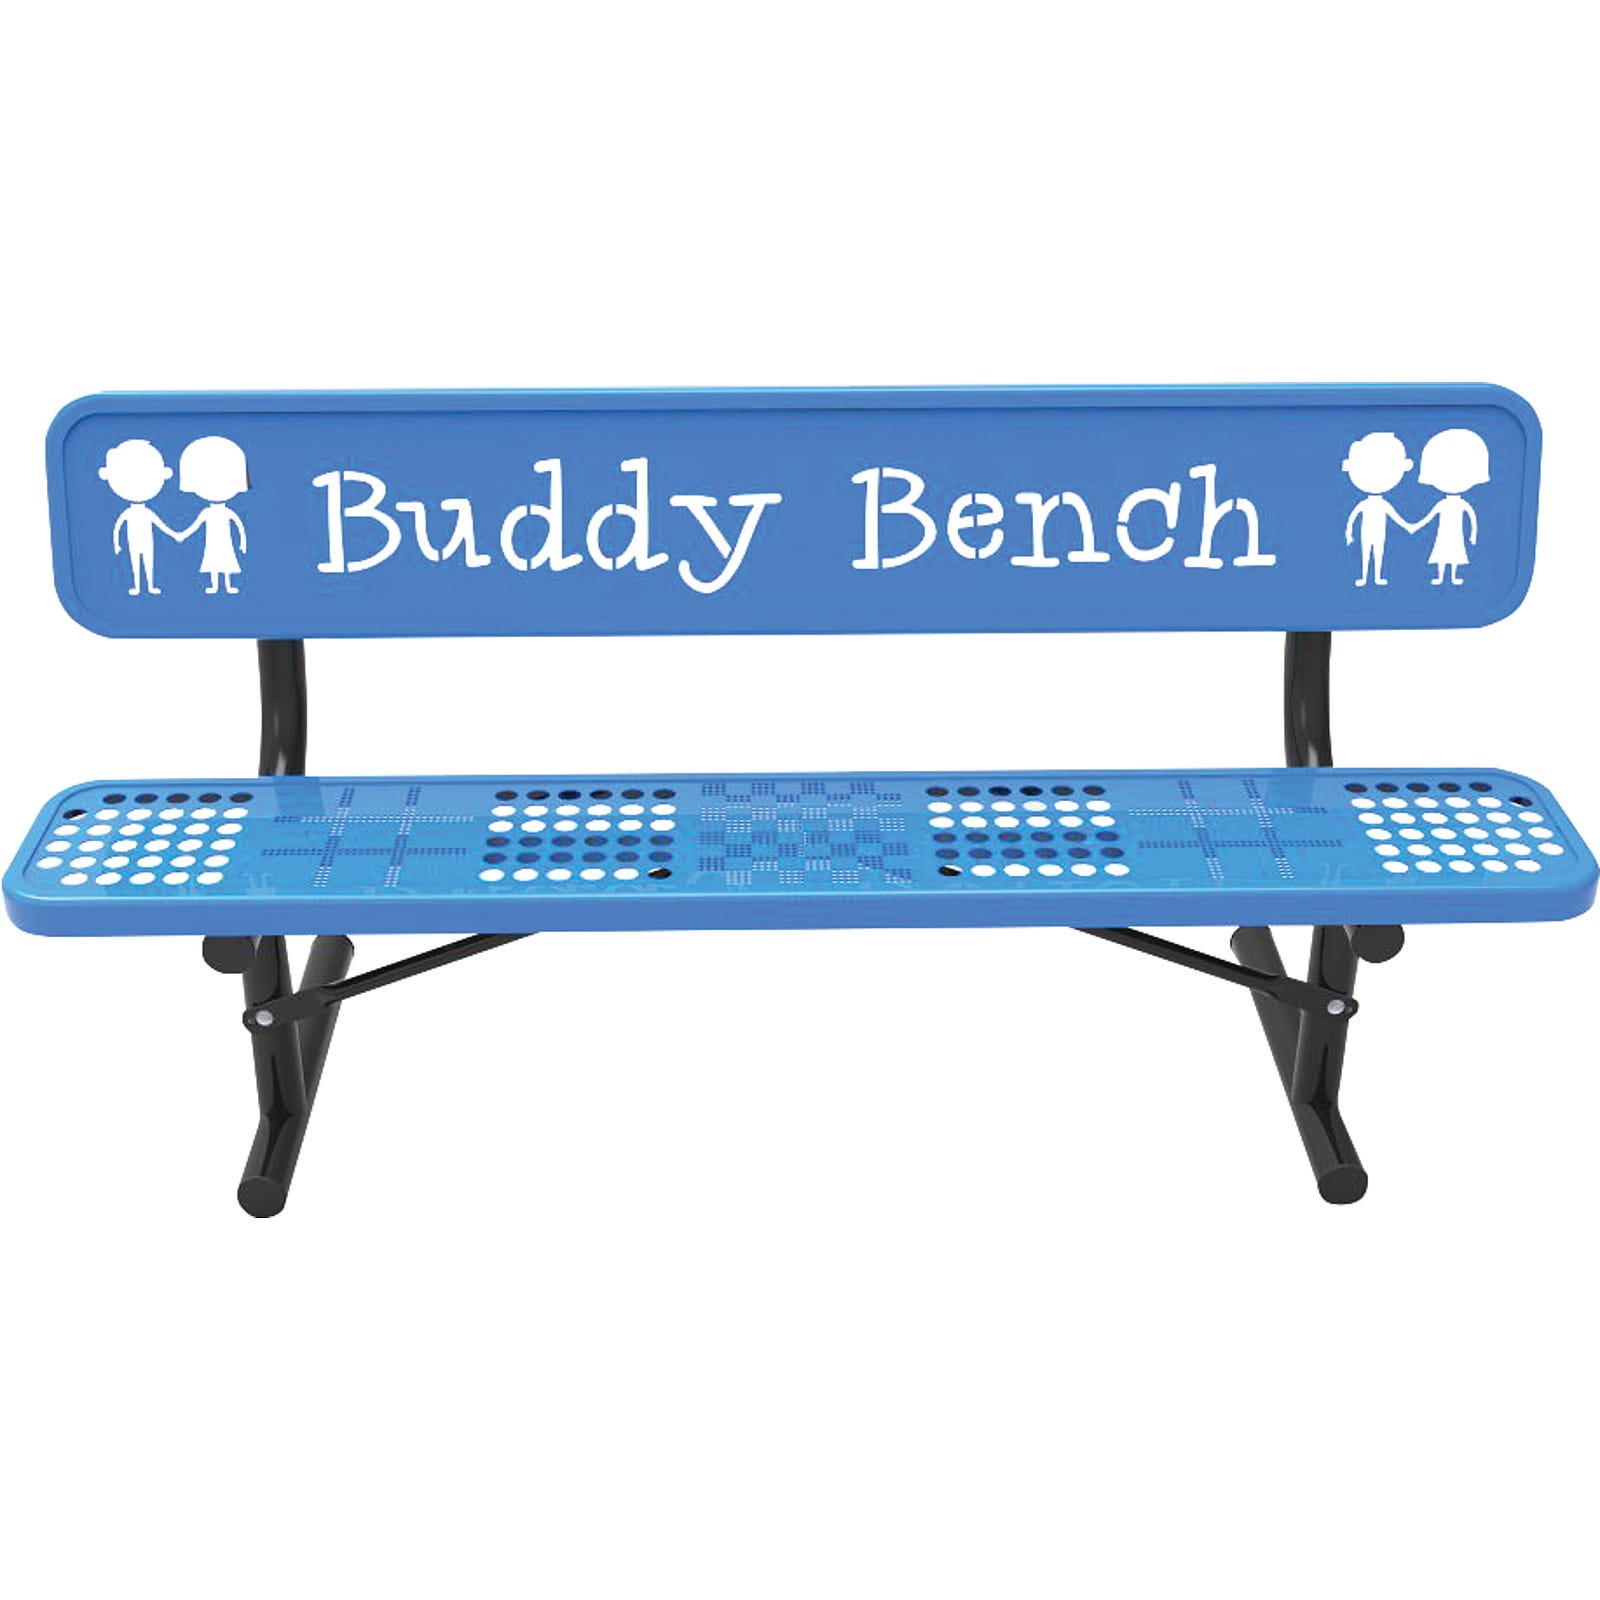 UltraPlay Buddy Bench